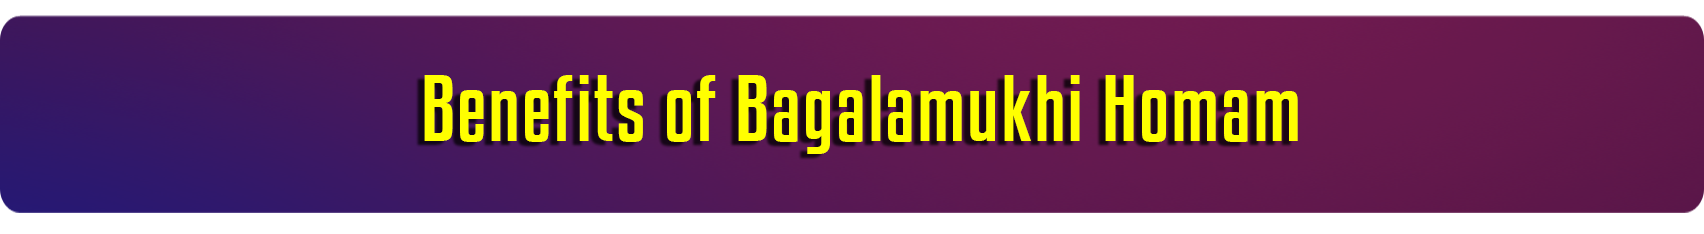 Bagalamukhi Homam Combined Benefits